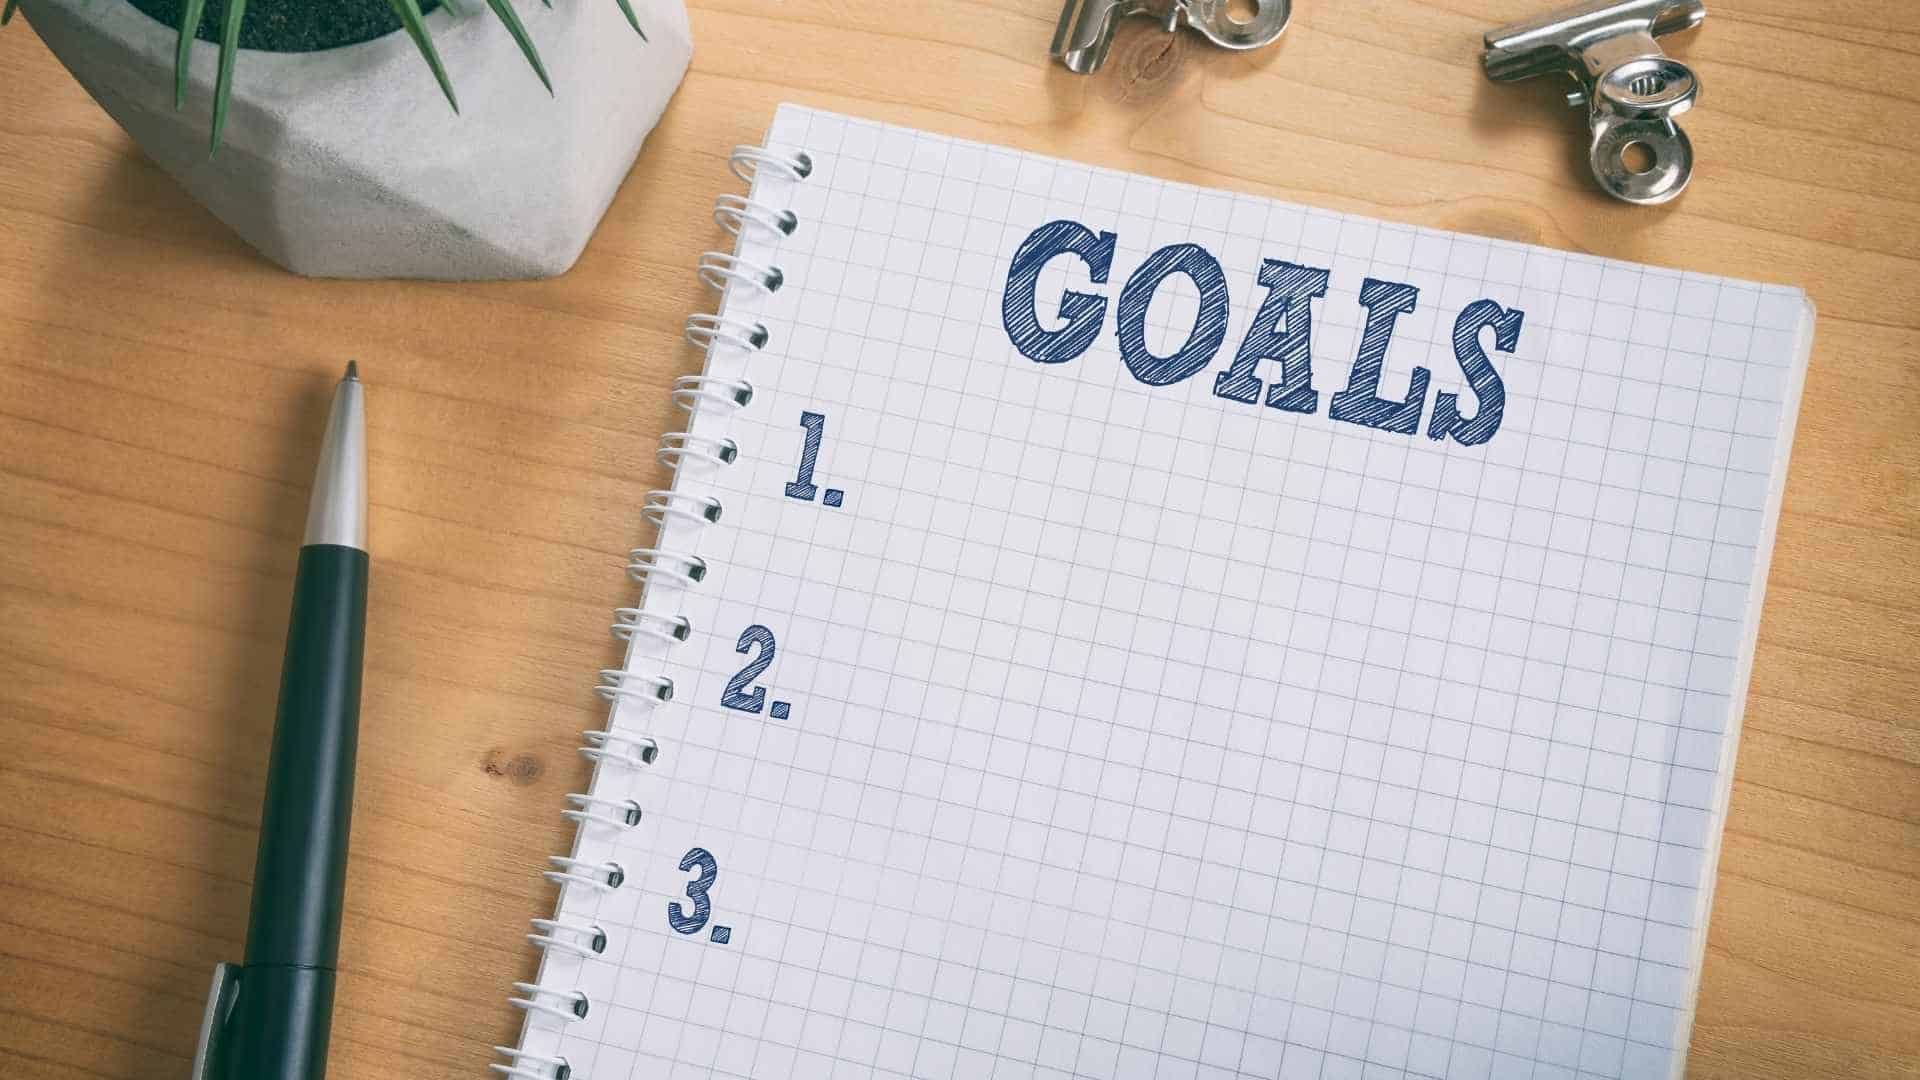 3.	Establish Goals and Priorities Your Tasks